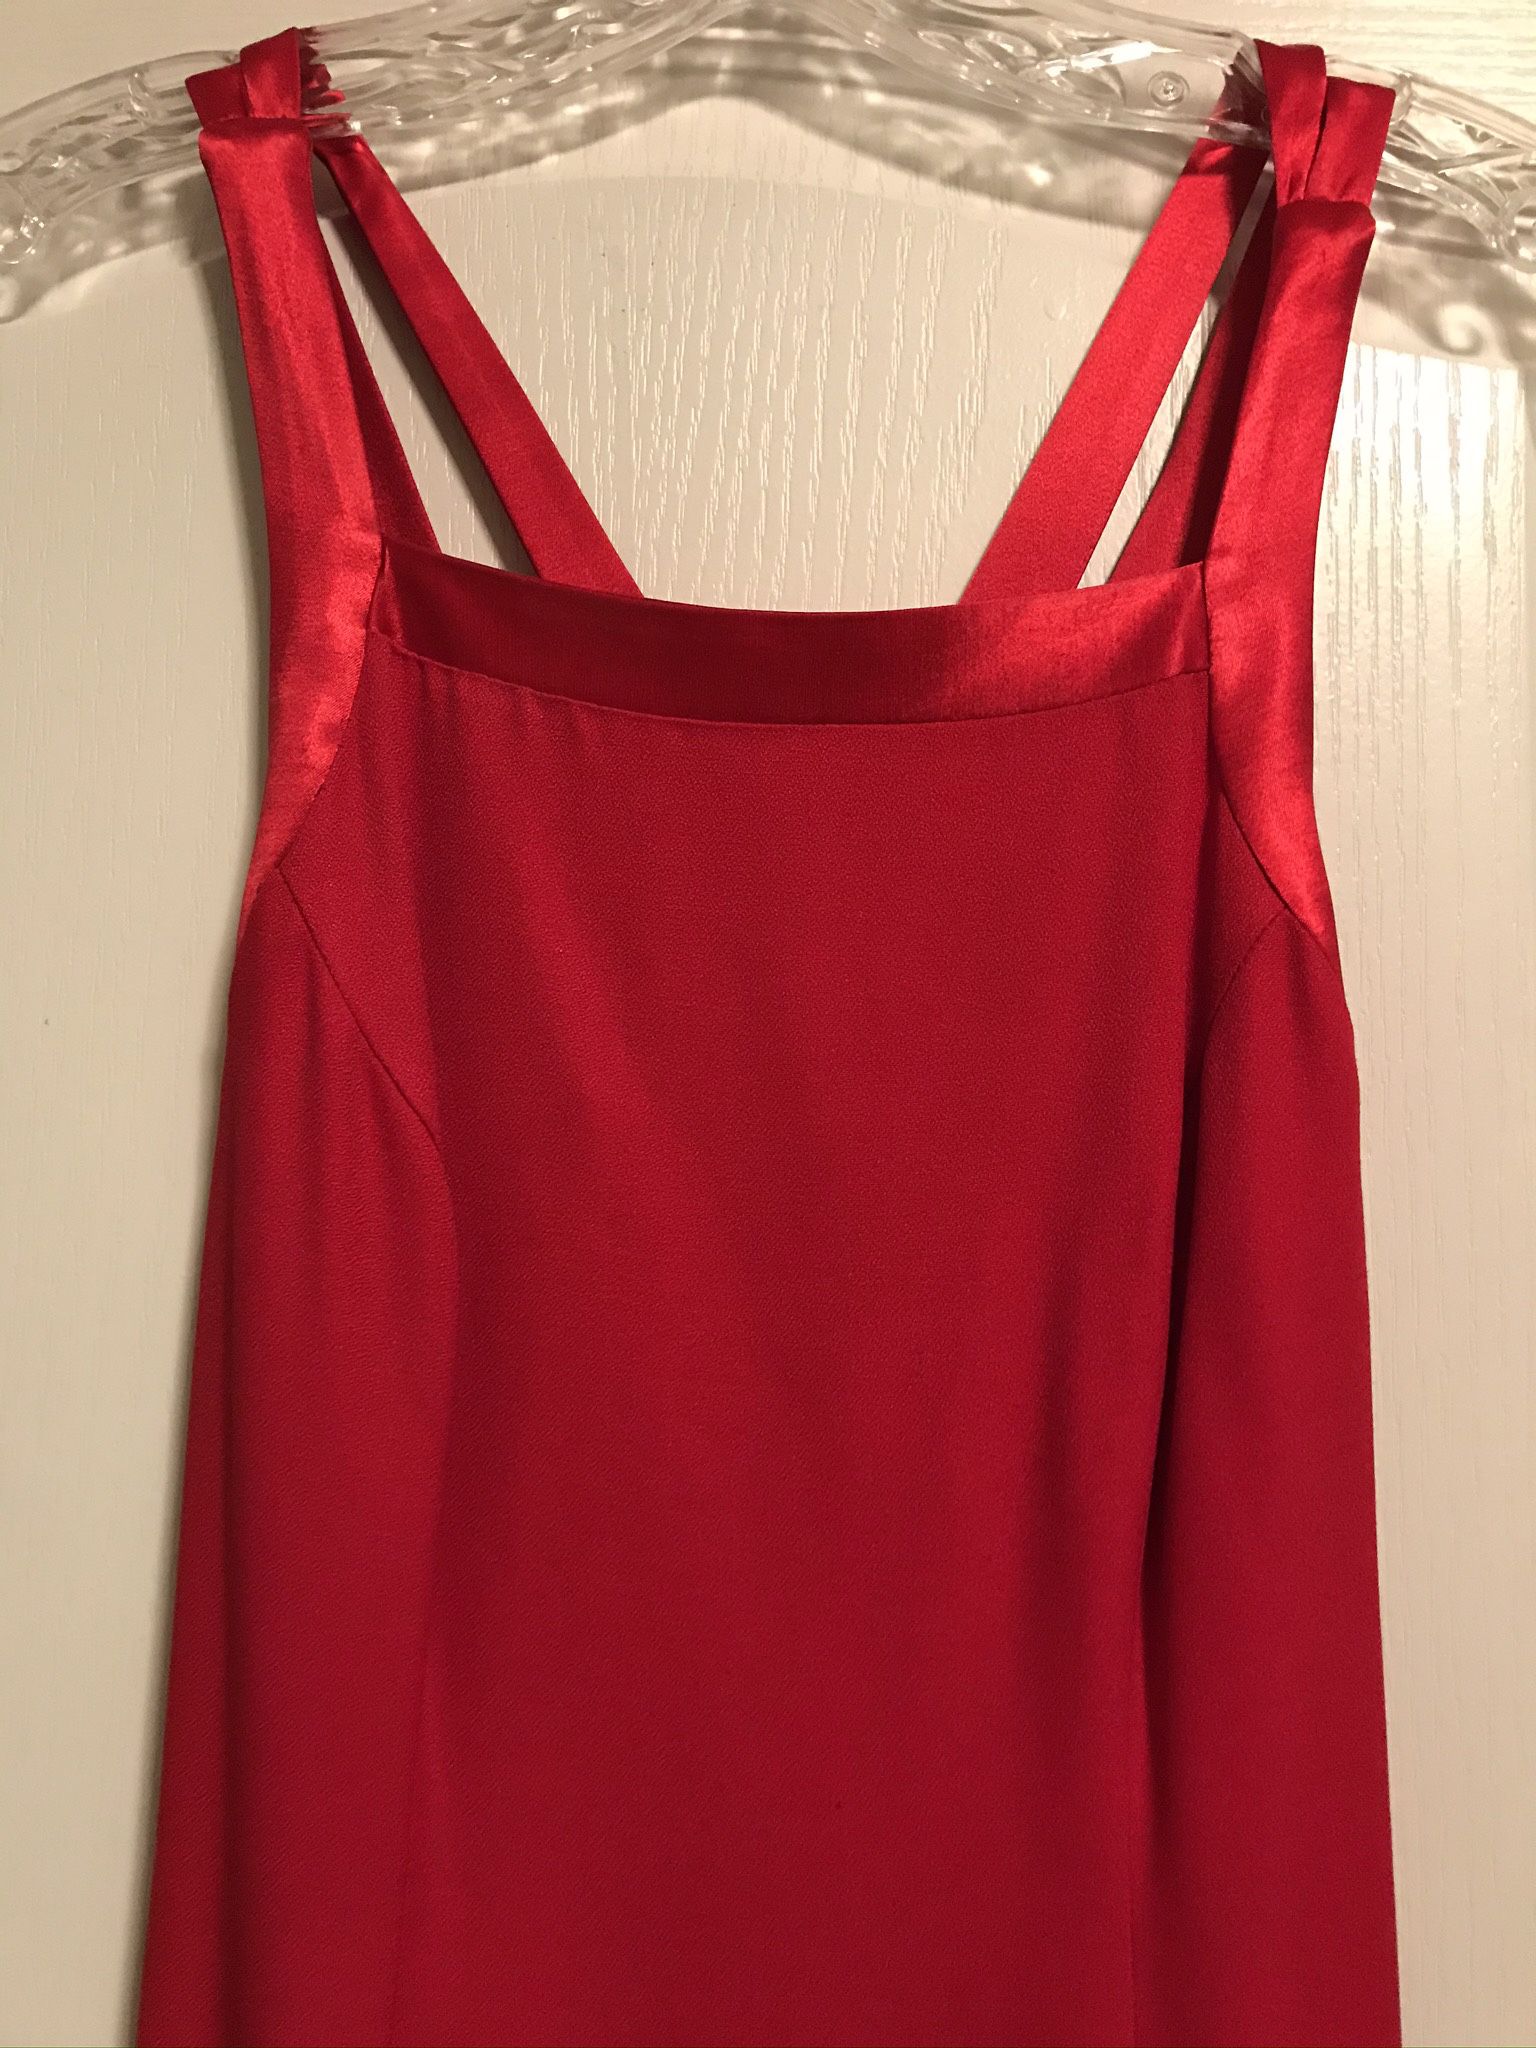 CDC Red Dress